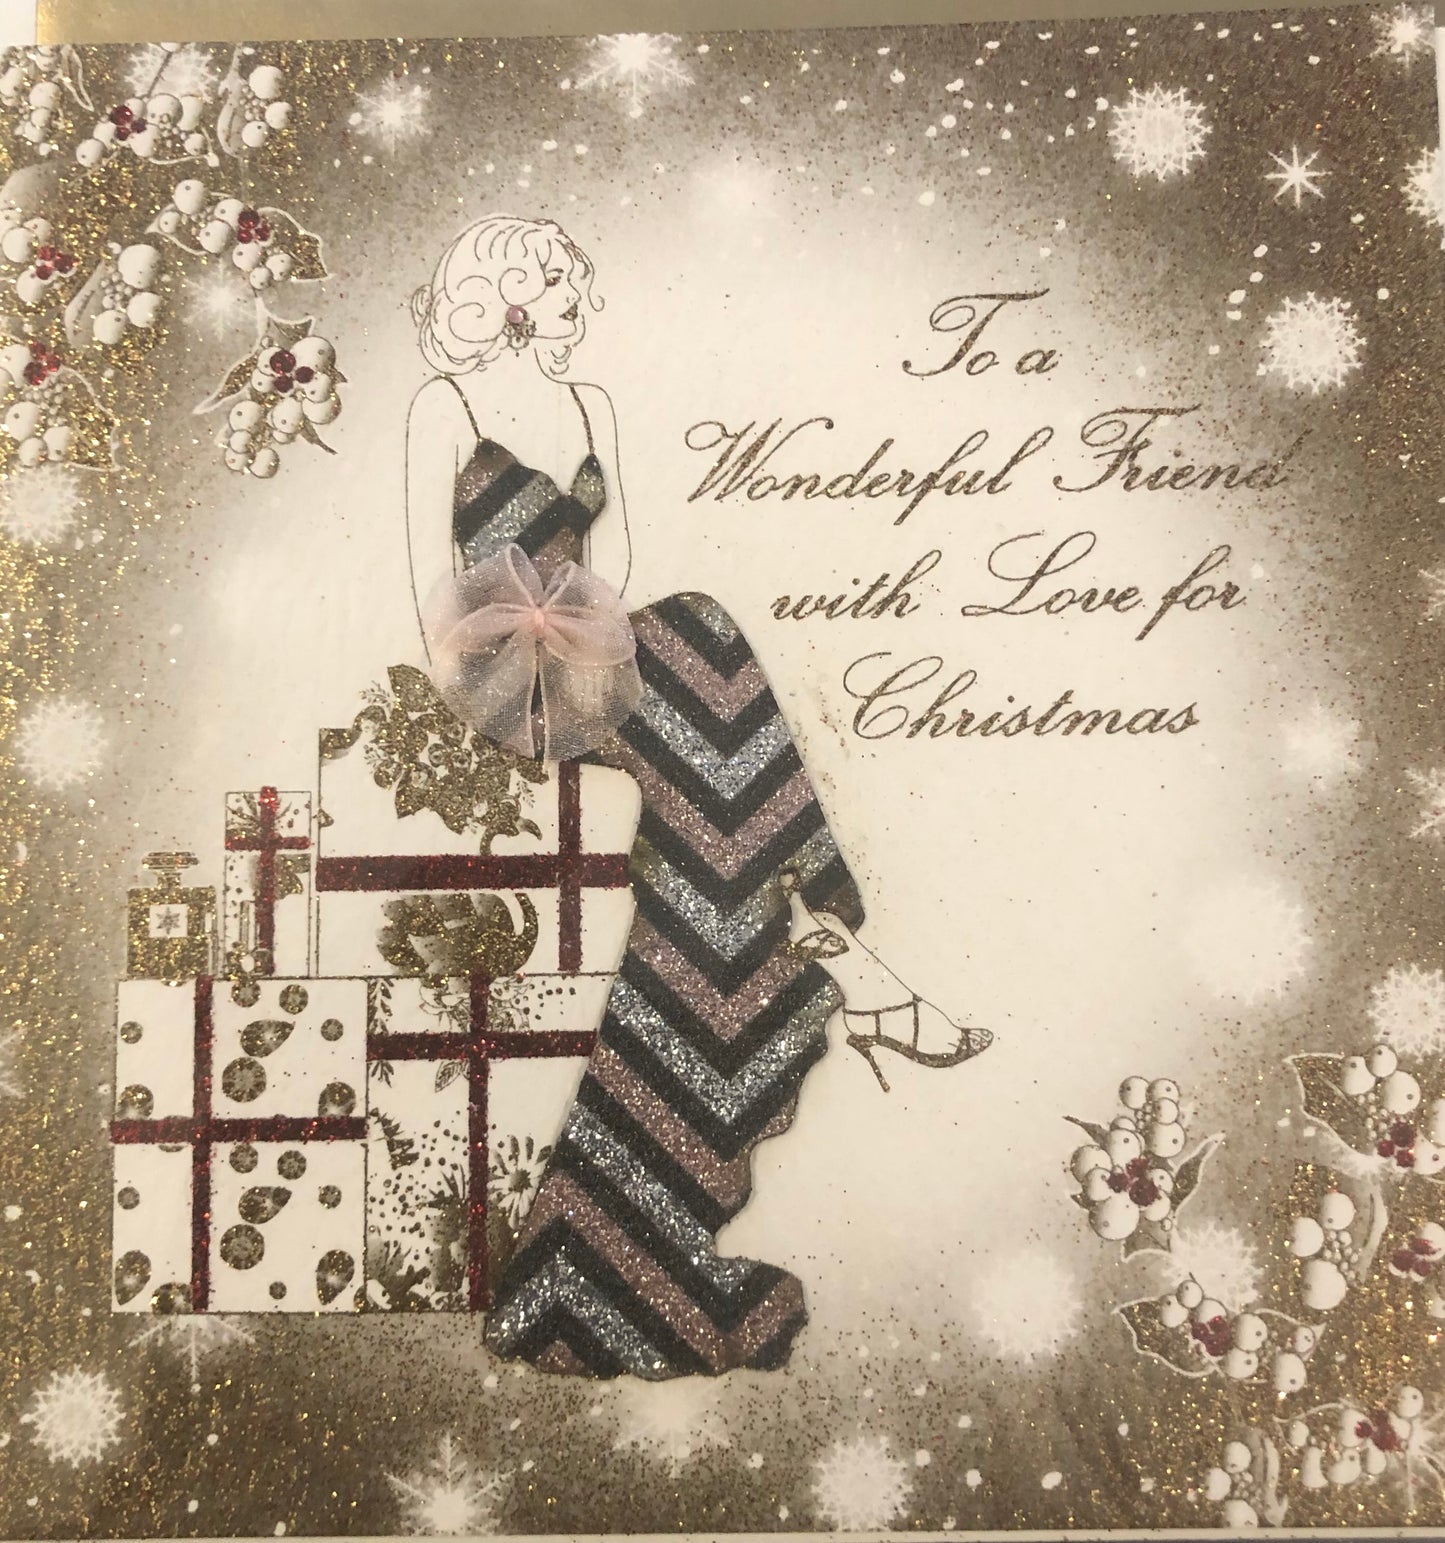 Wonderful Friend Luxury Christmas Card.